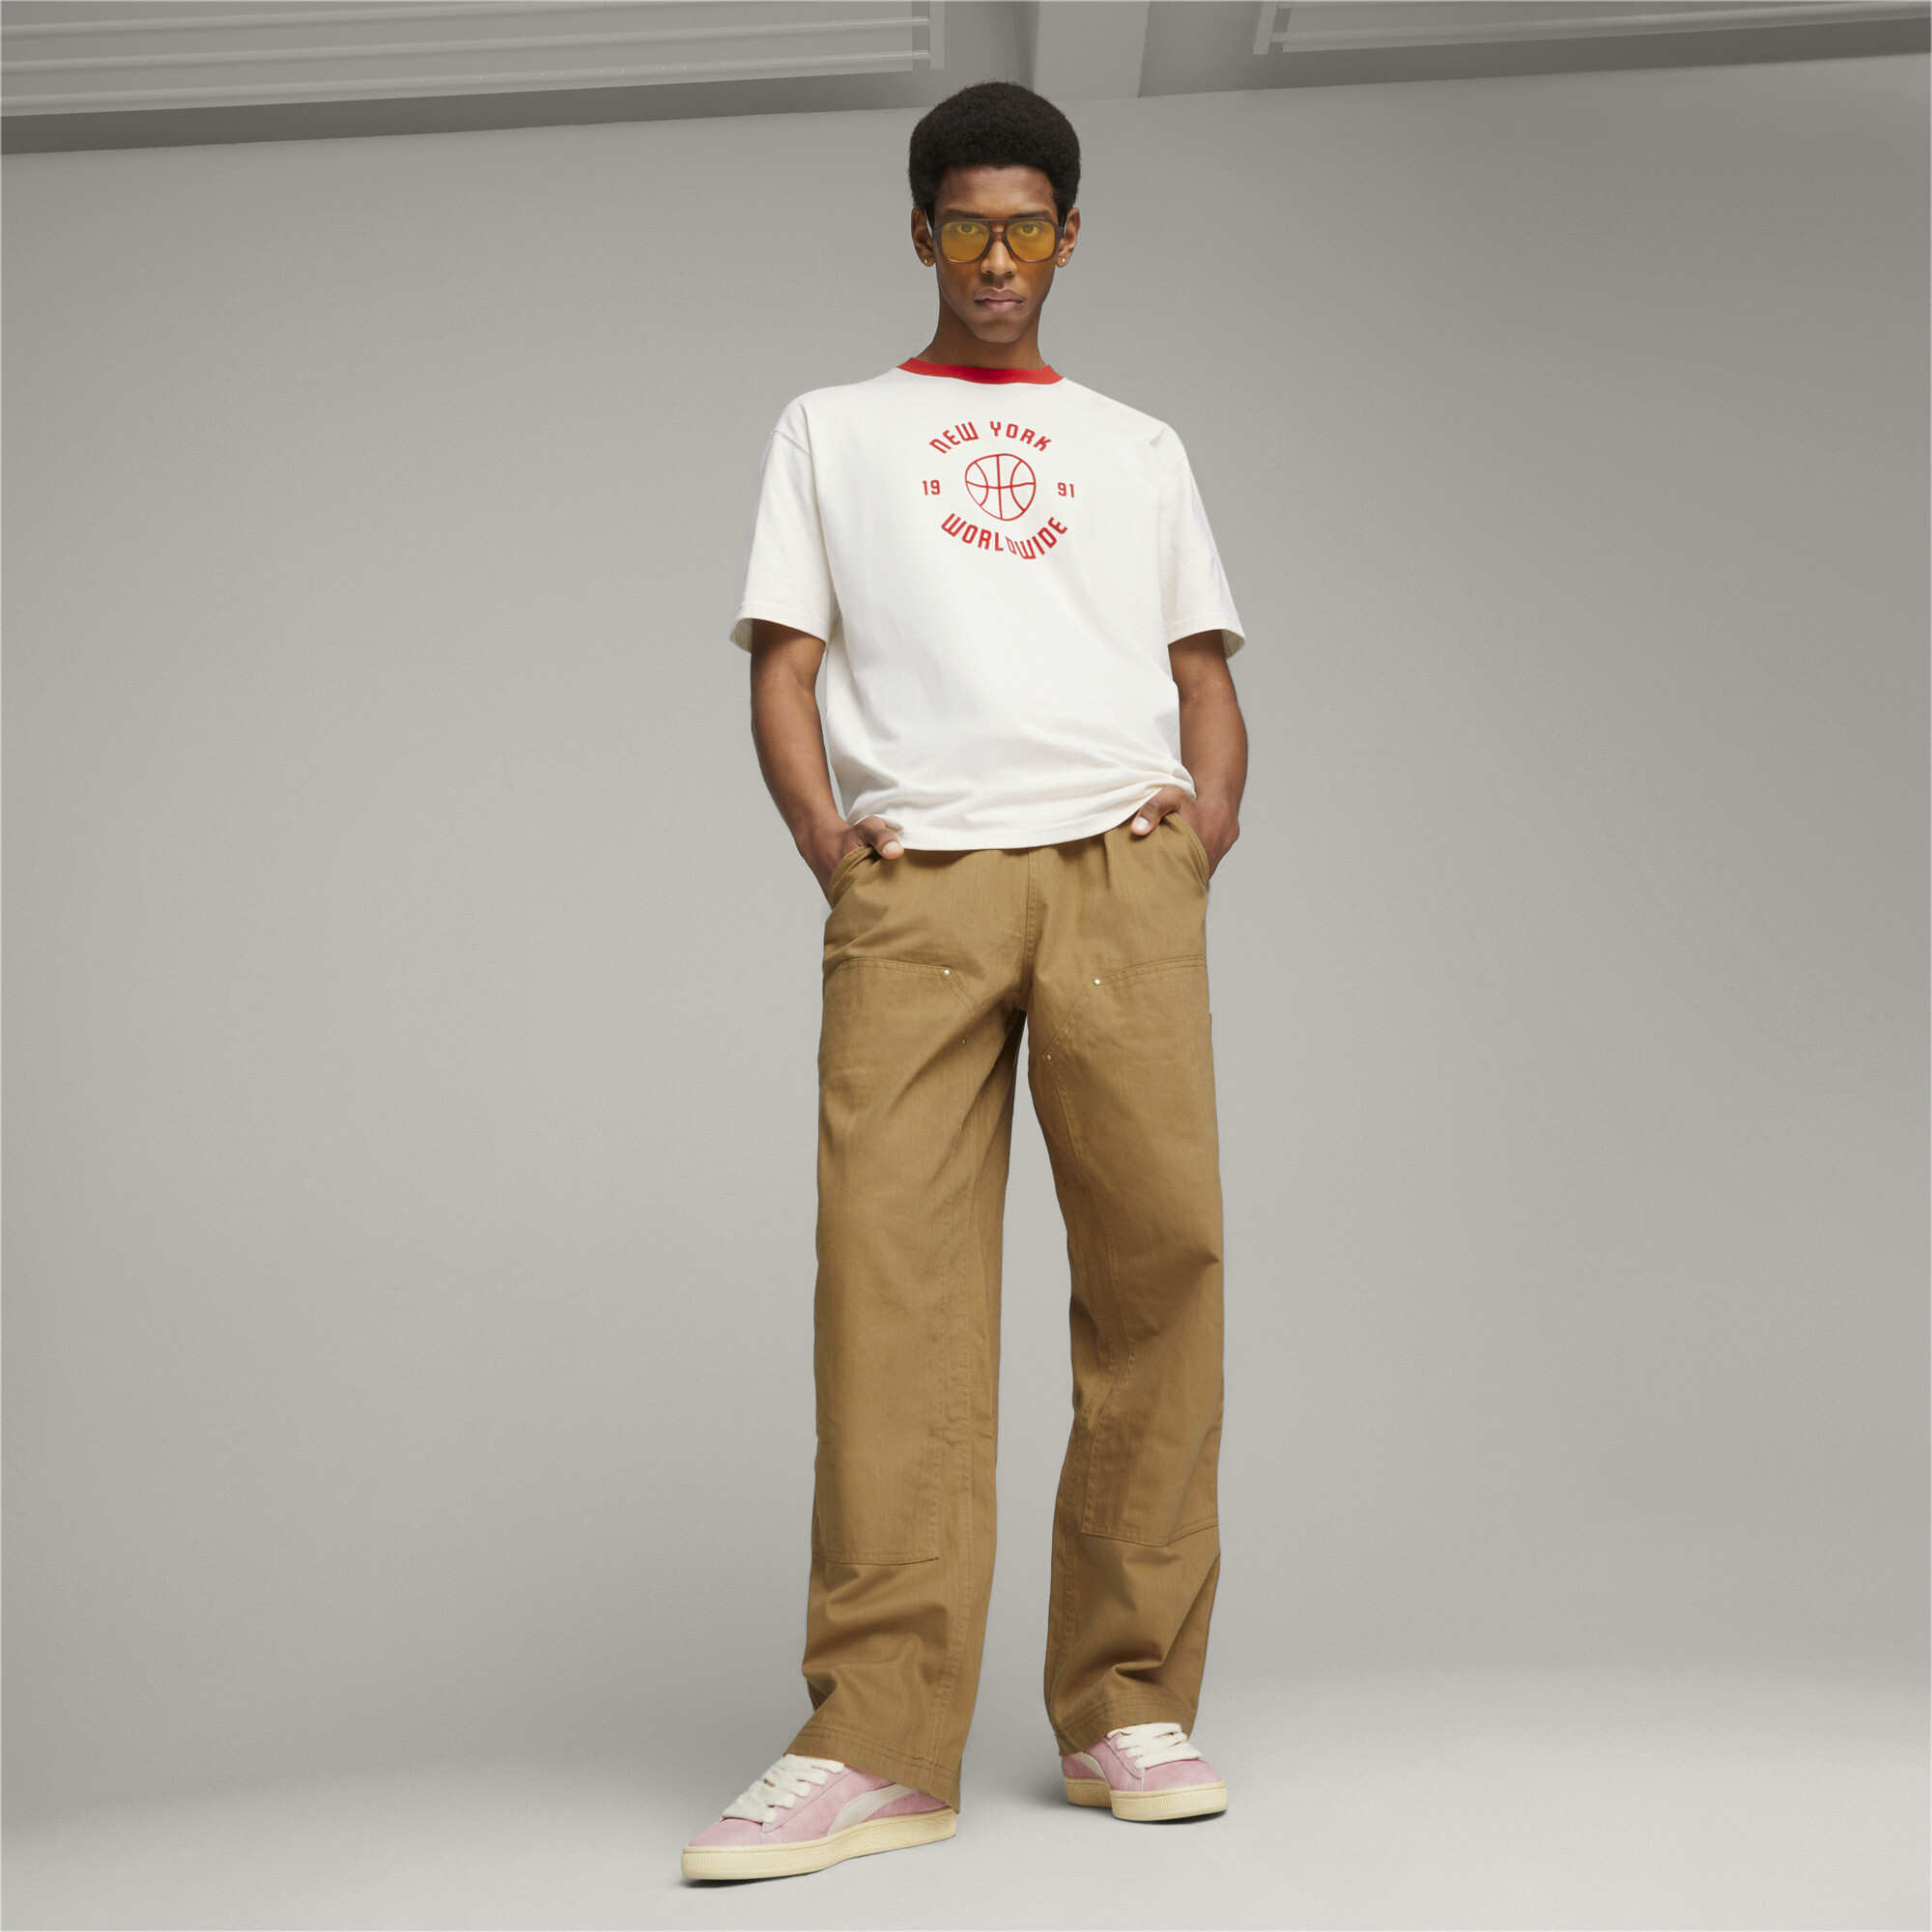 Men's PUMA X RHUIGI Graphic T-Shirt In White, Size XL